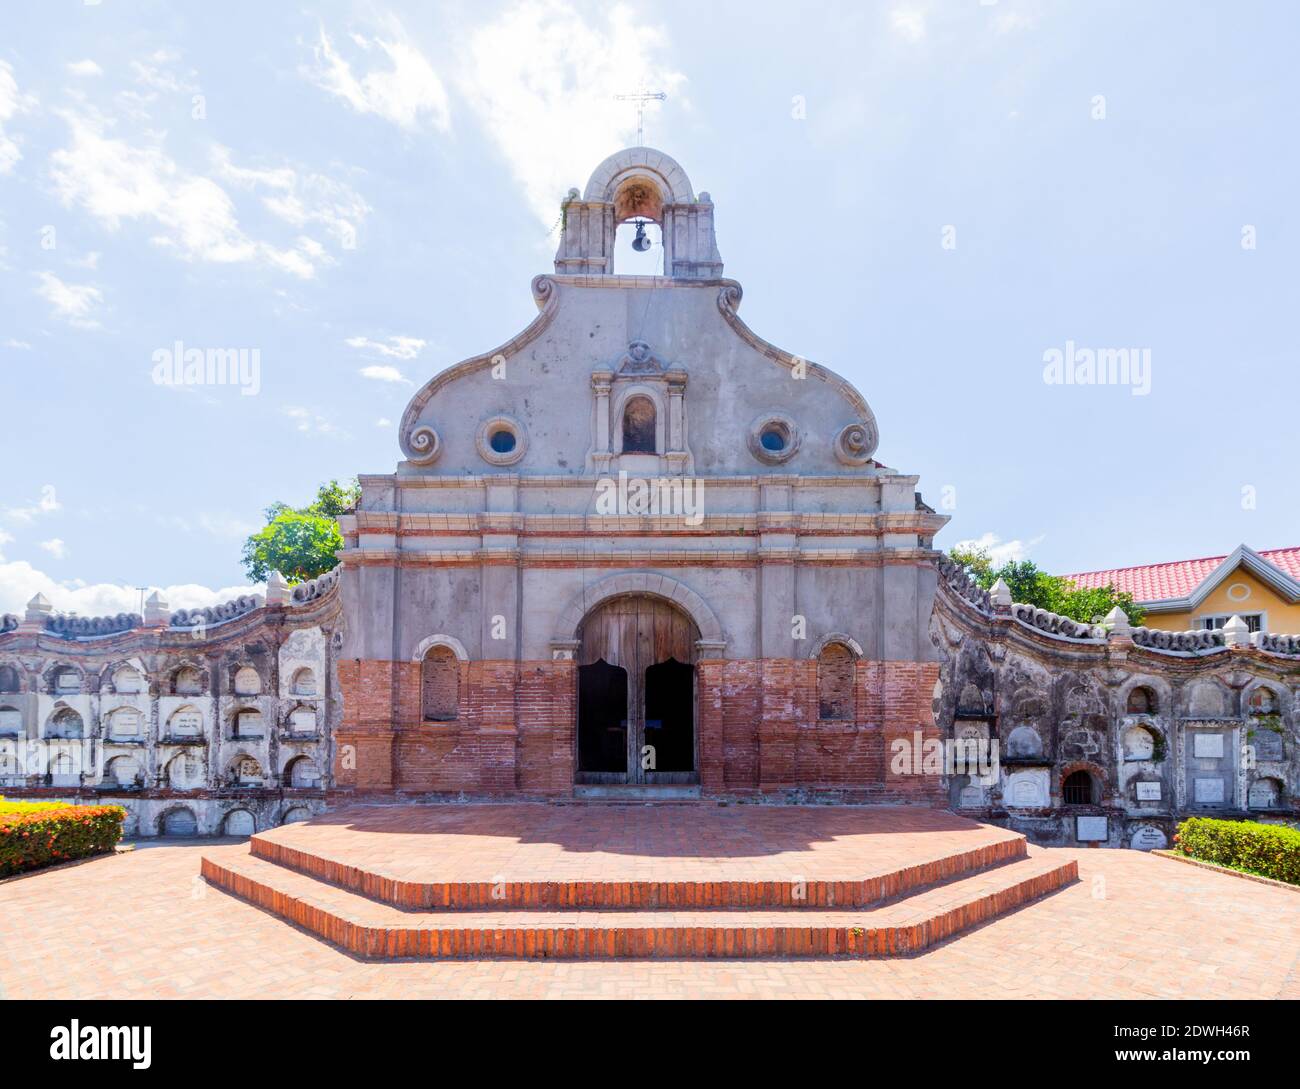 Facade of the Nagcarlan Underground Cemetery chapel in Laguna, Philippines Stock Photo